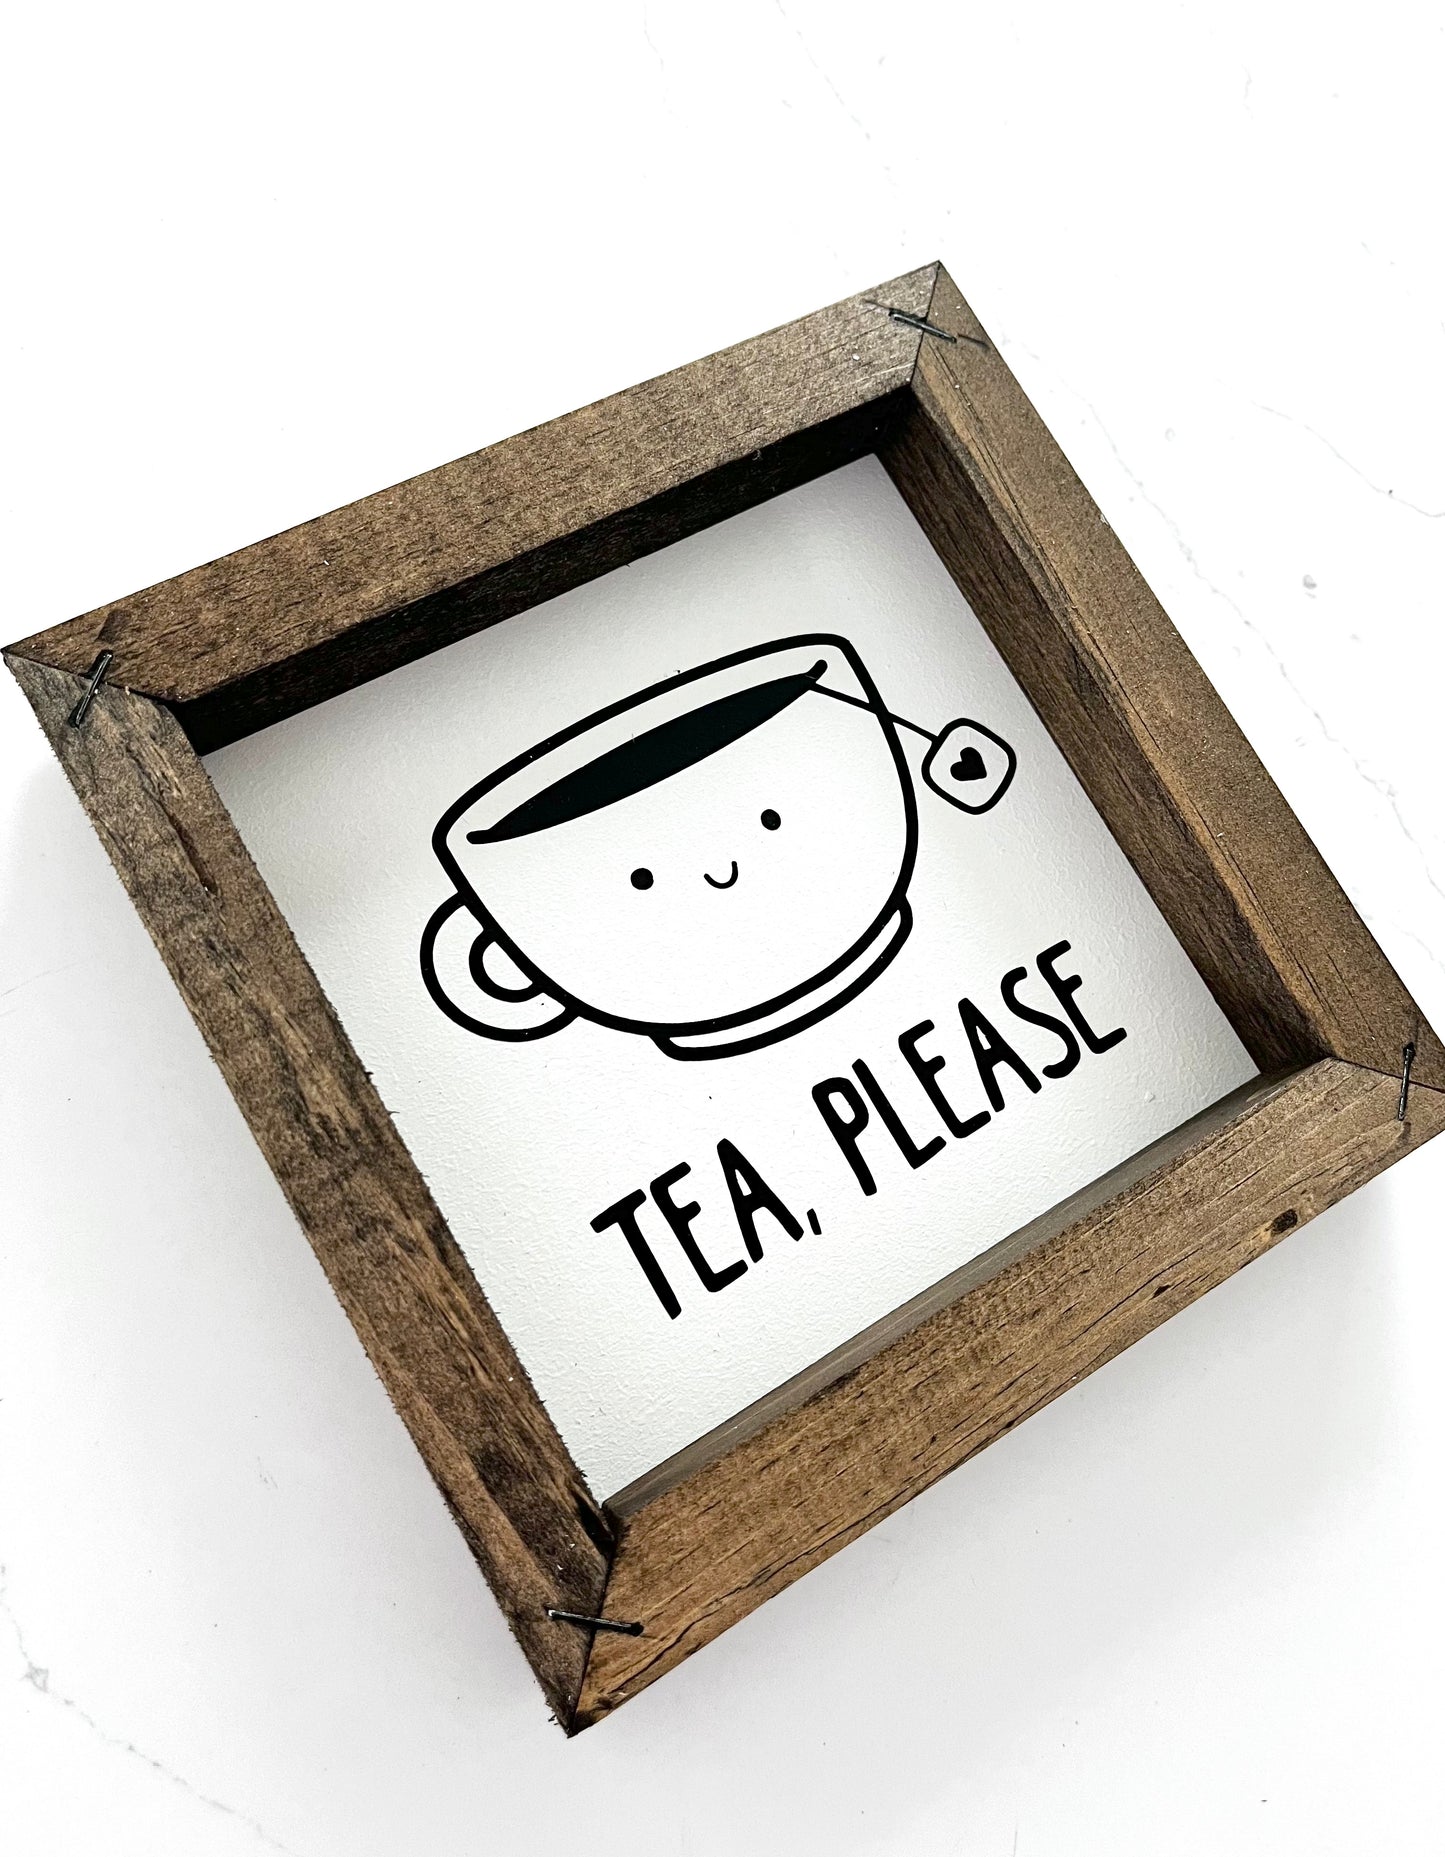 Tea, Please